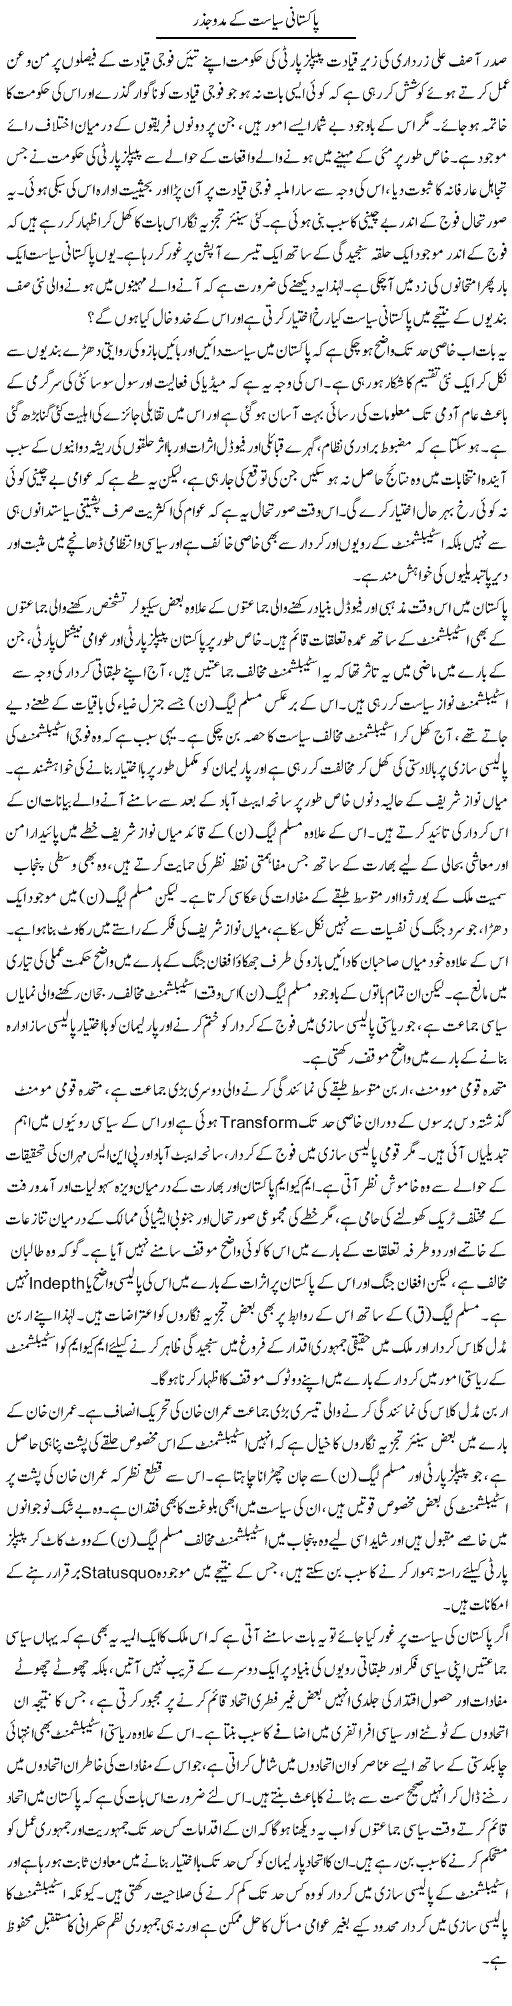 Pakistani Politics Express Column Muqtada Mansoor 4 July 2011